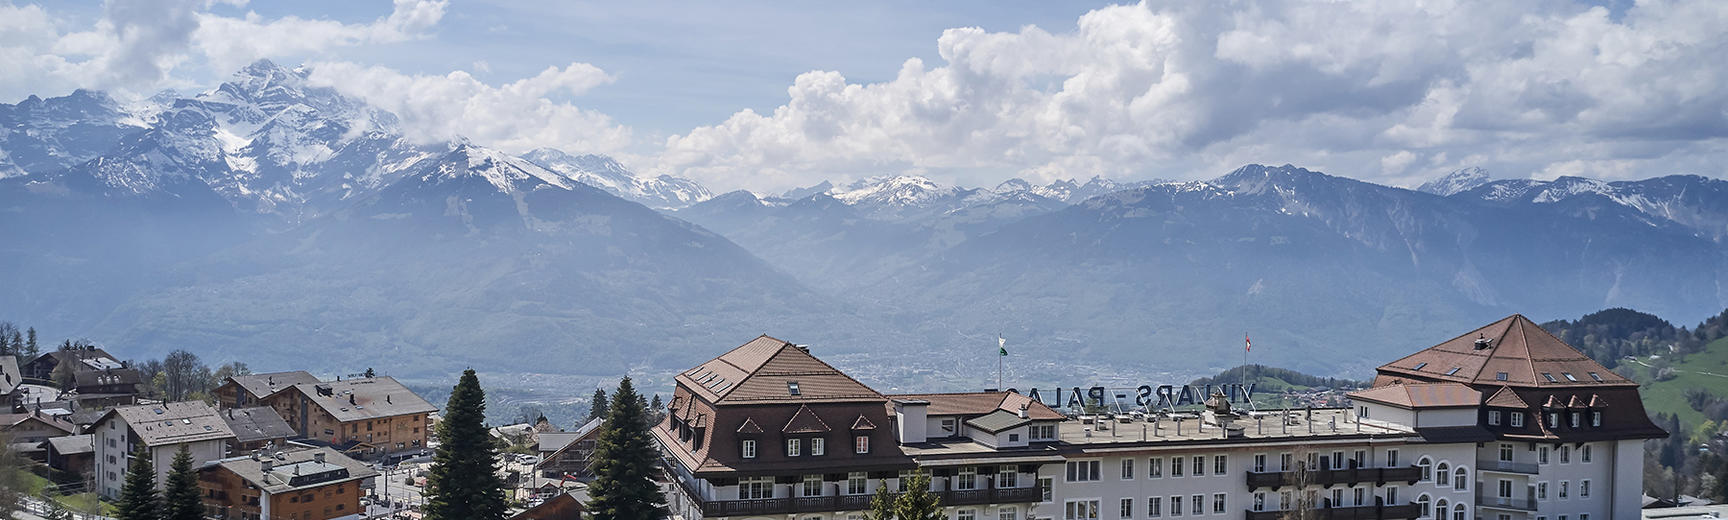 Villars Palace Hotel, Switzerland